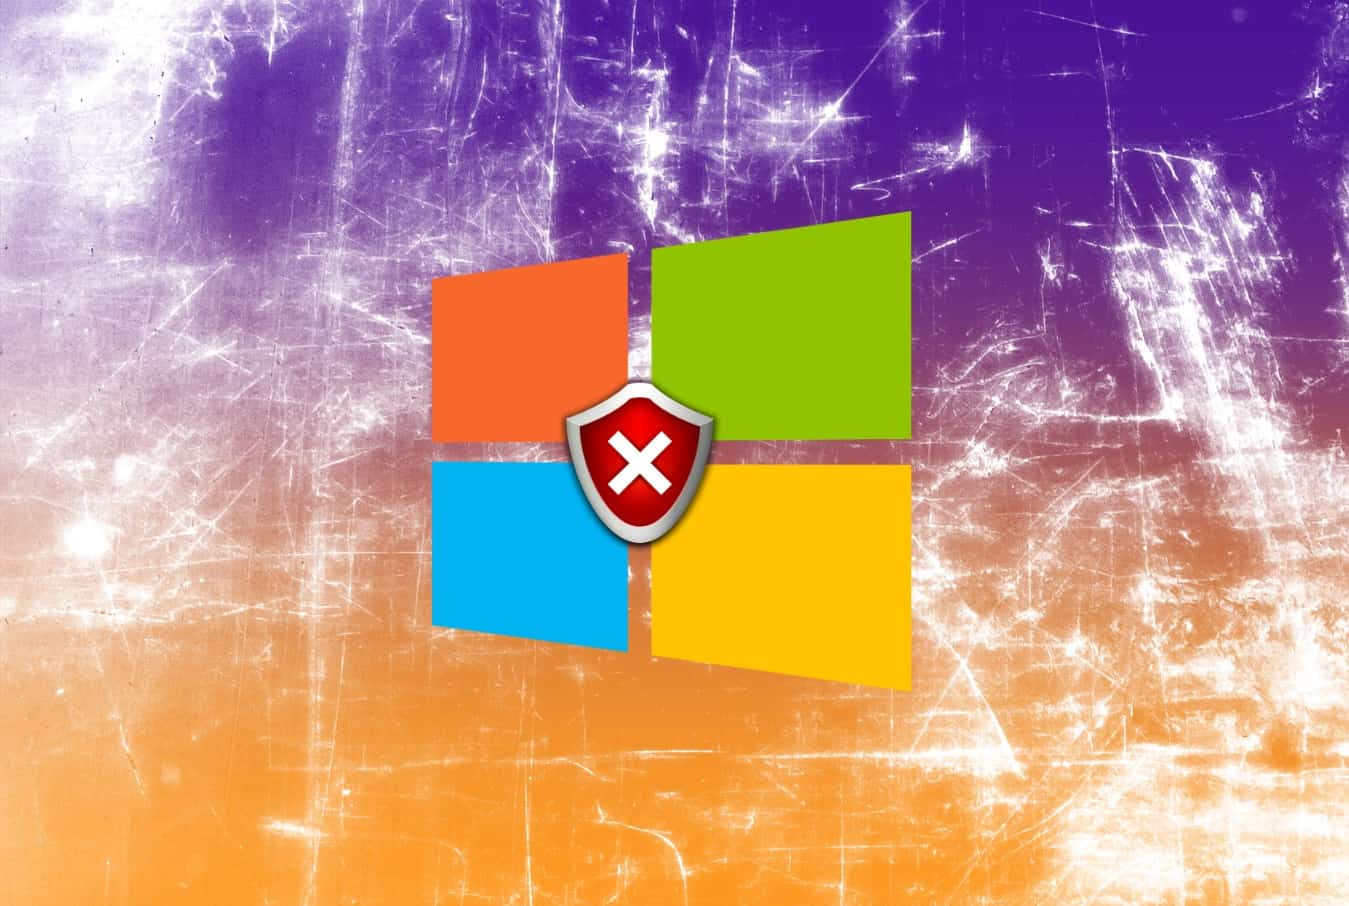 Google reveals details on active vulnerability affecting Windows 10, 7